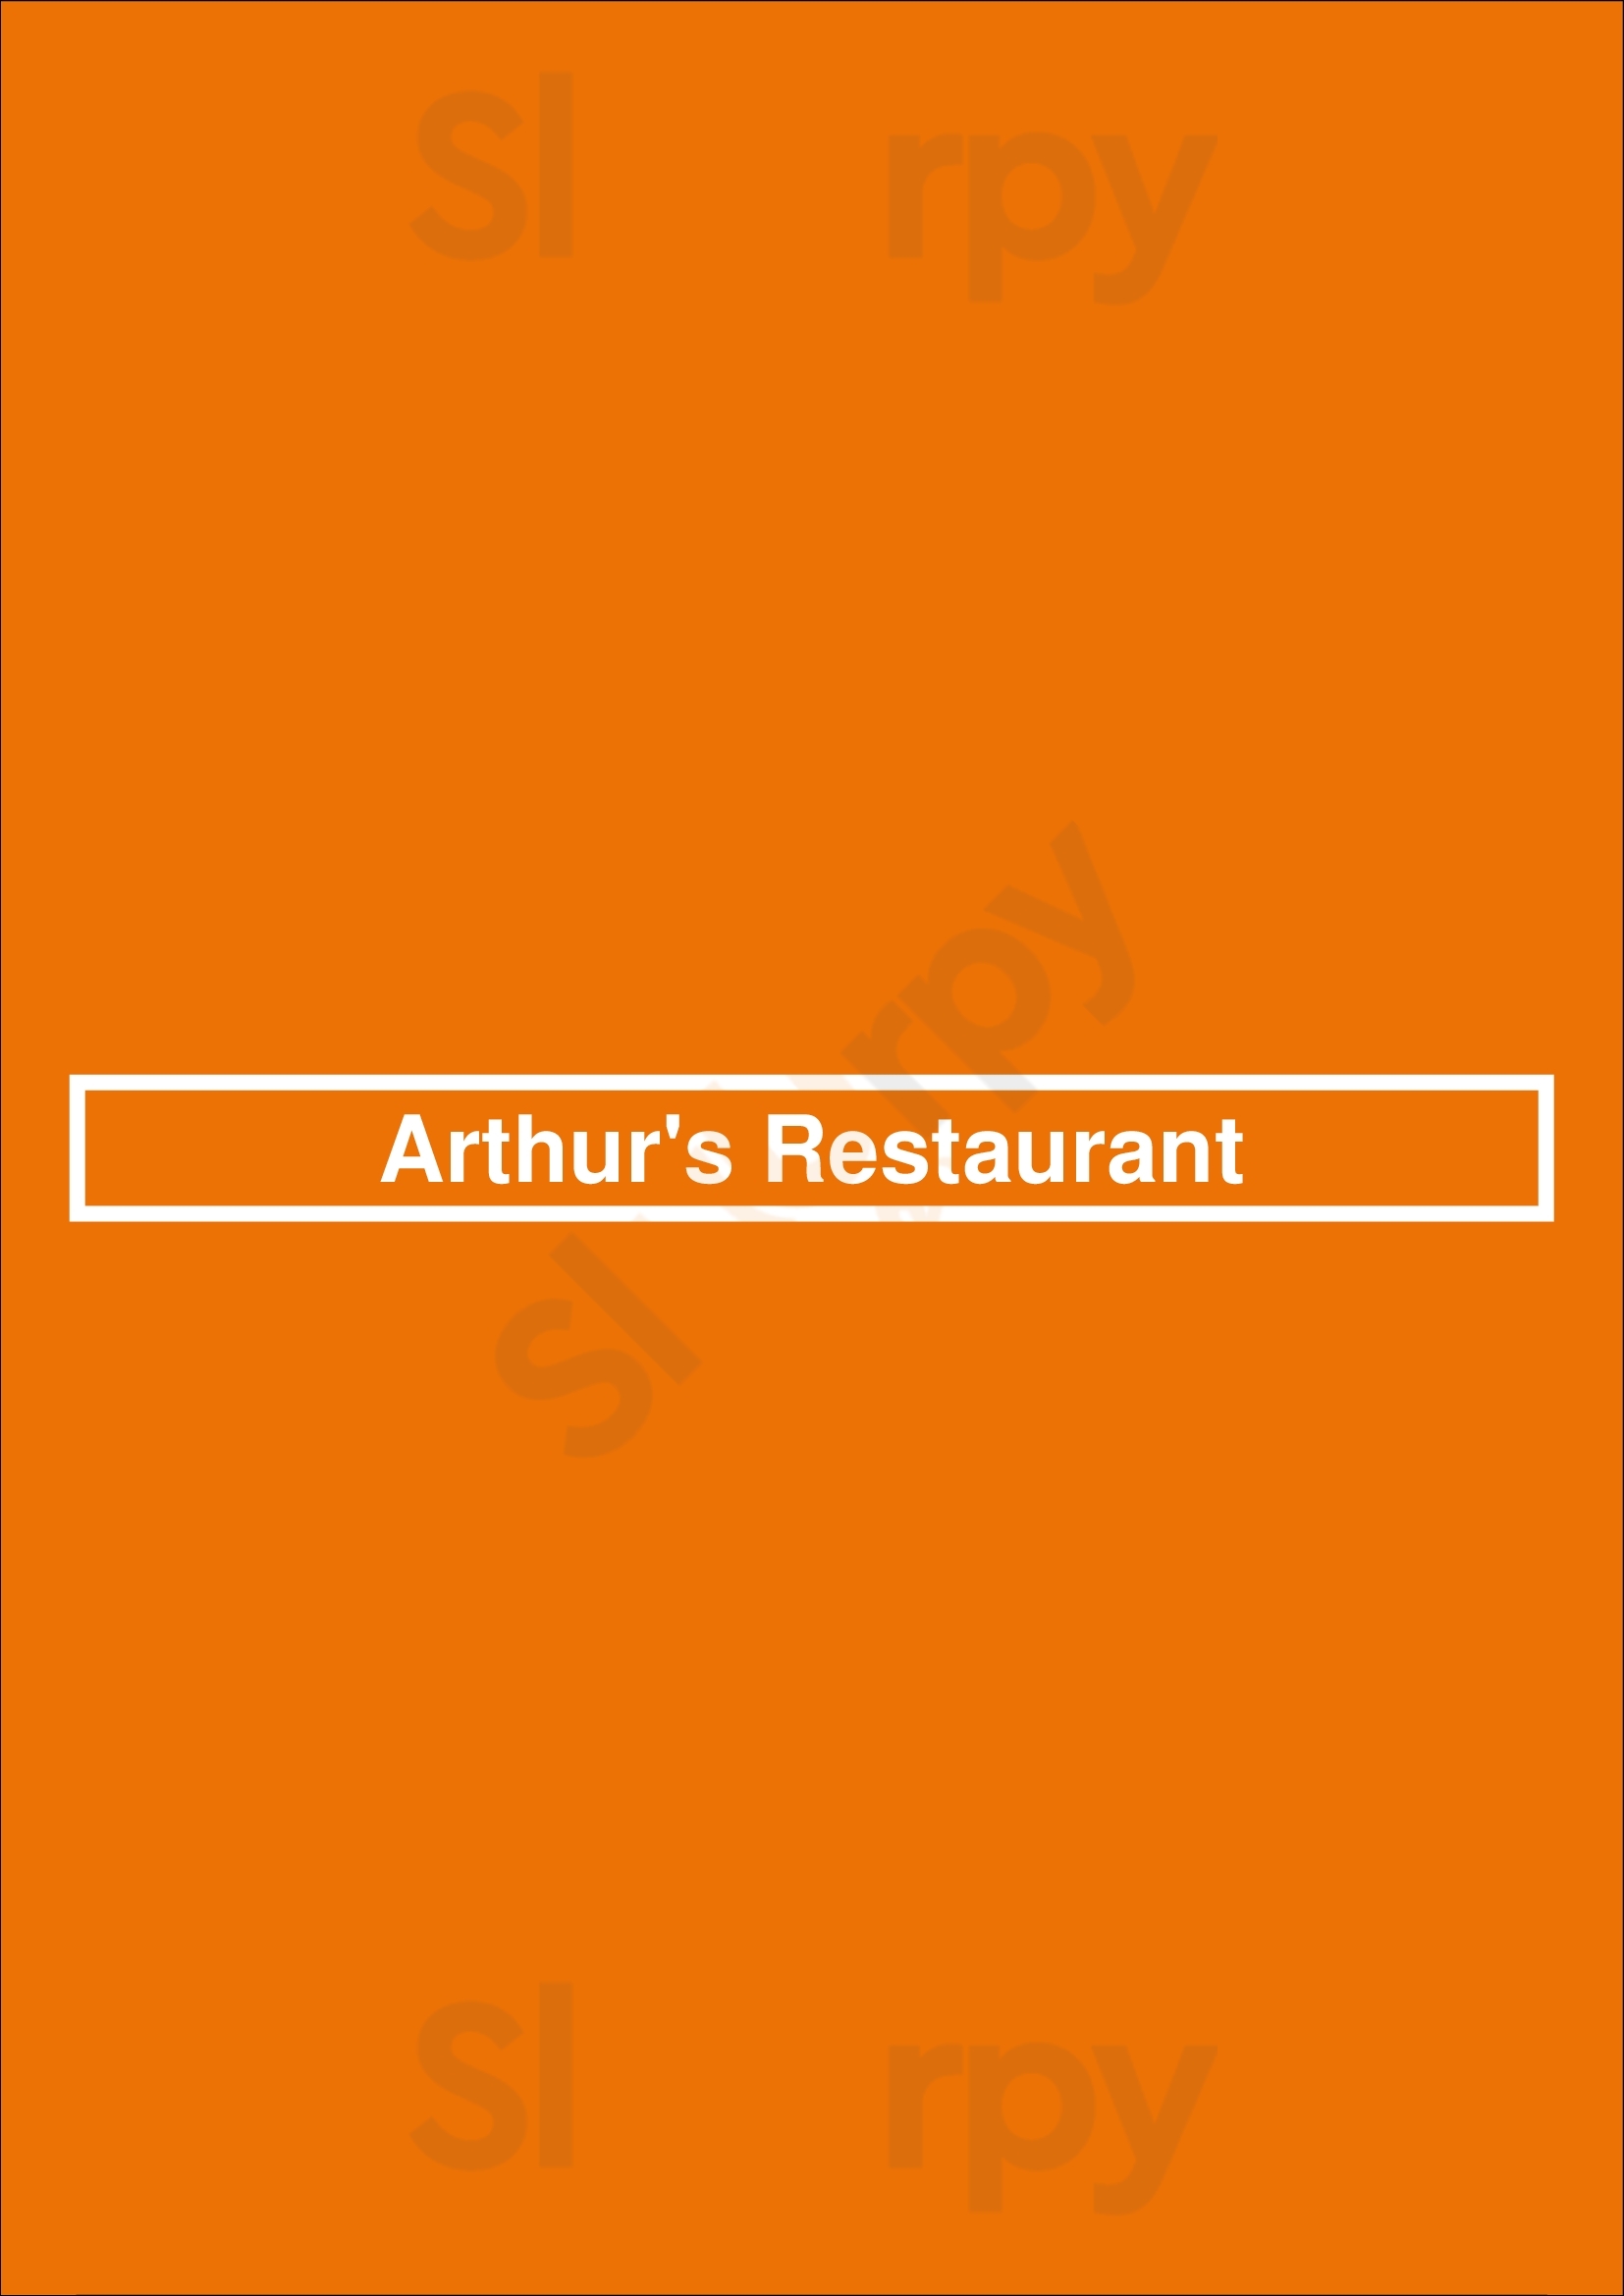 Arthur's Restaurant Addison Menu - 1